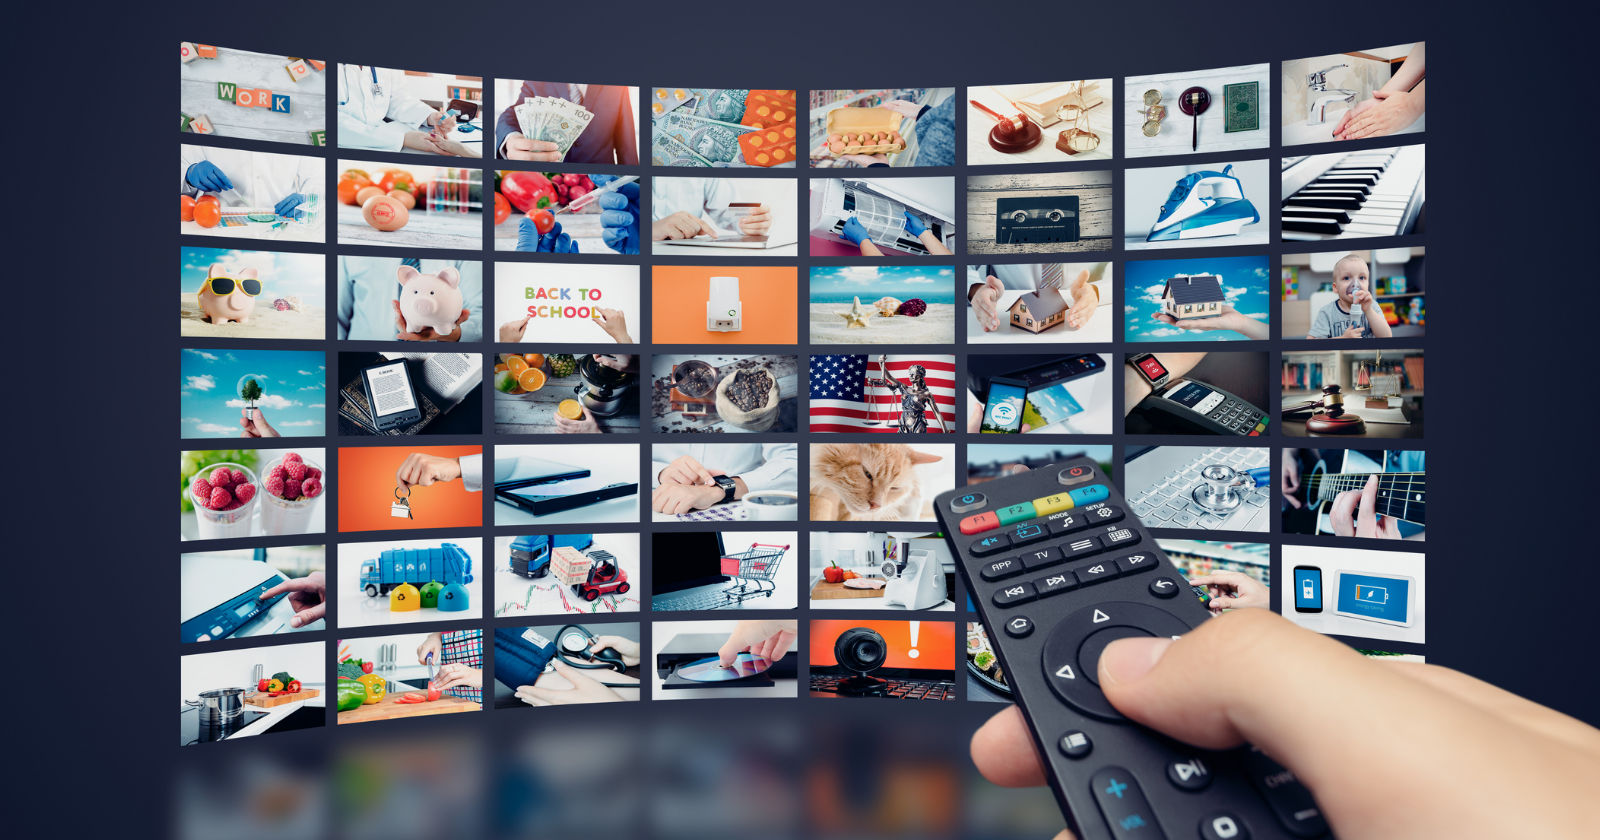 Global Video-On-Demand Market Report 2023